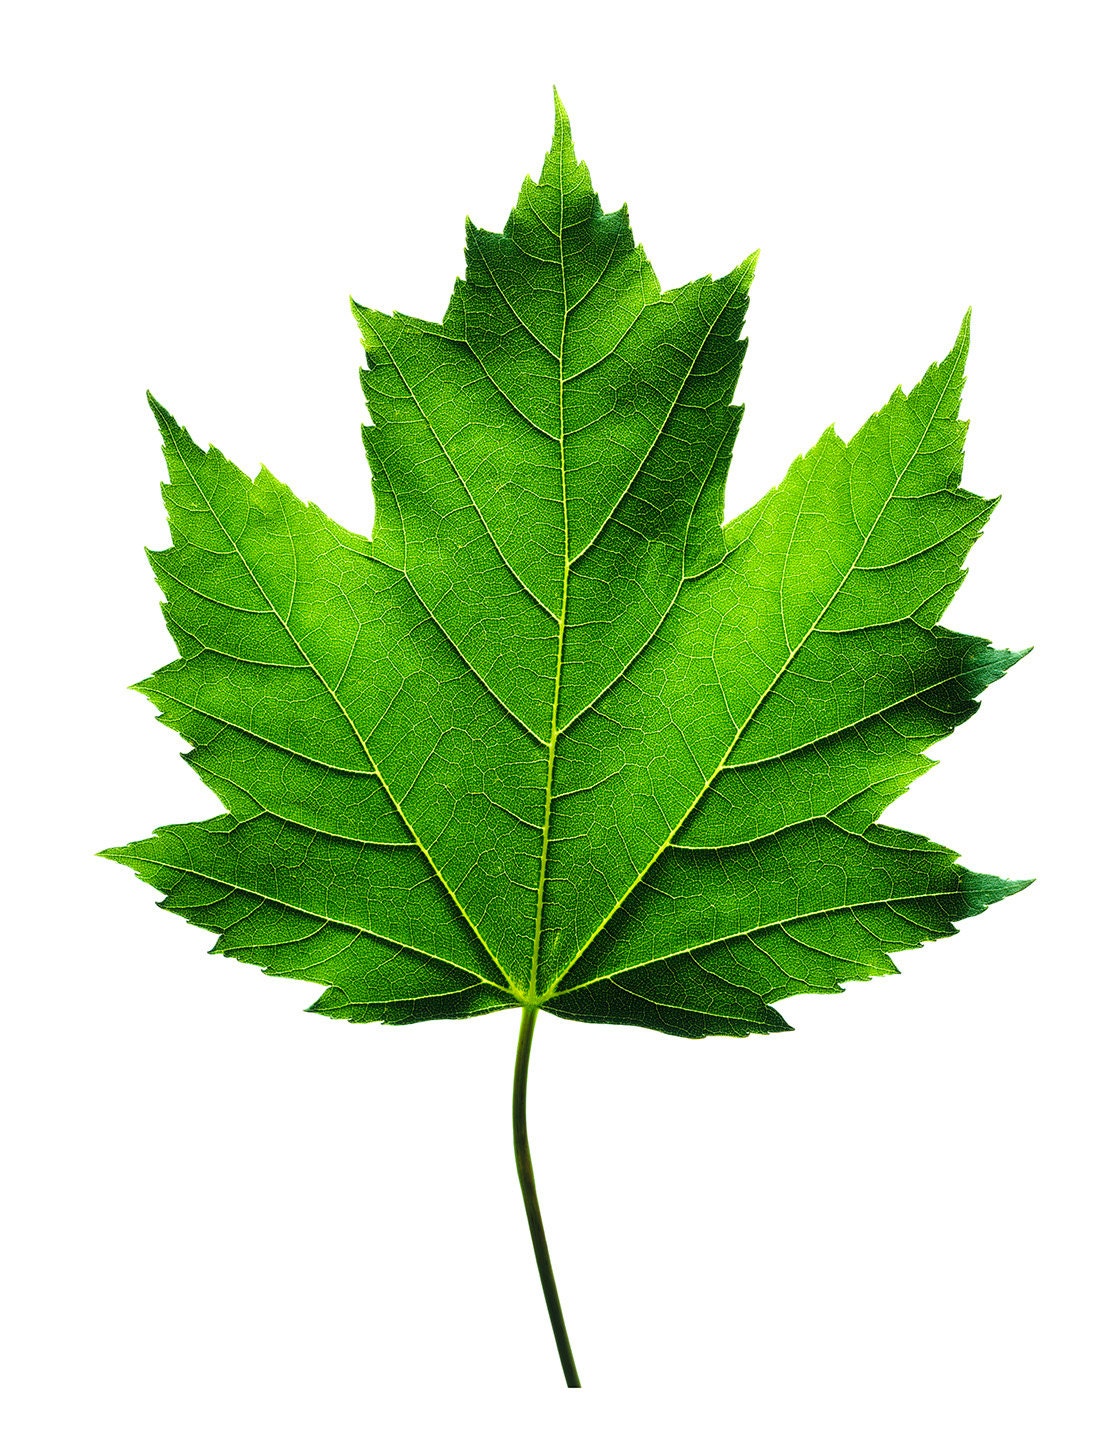 sugar maple leaf shape